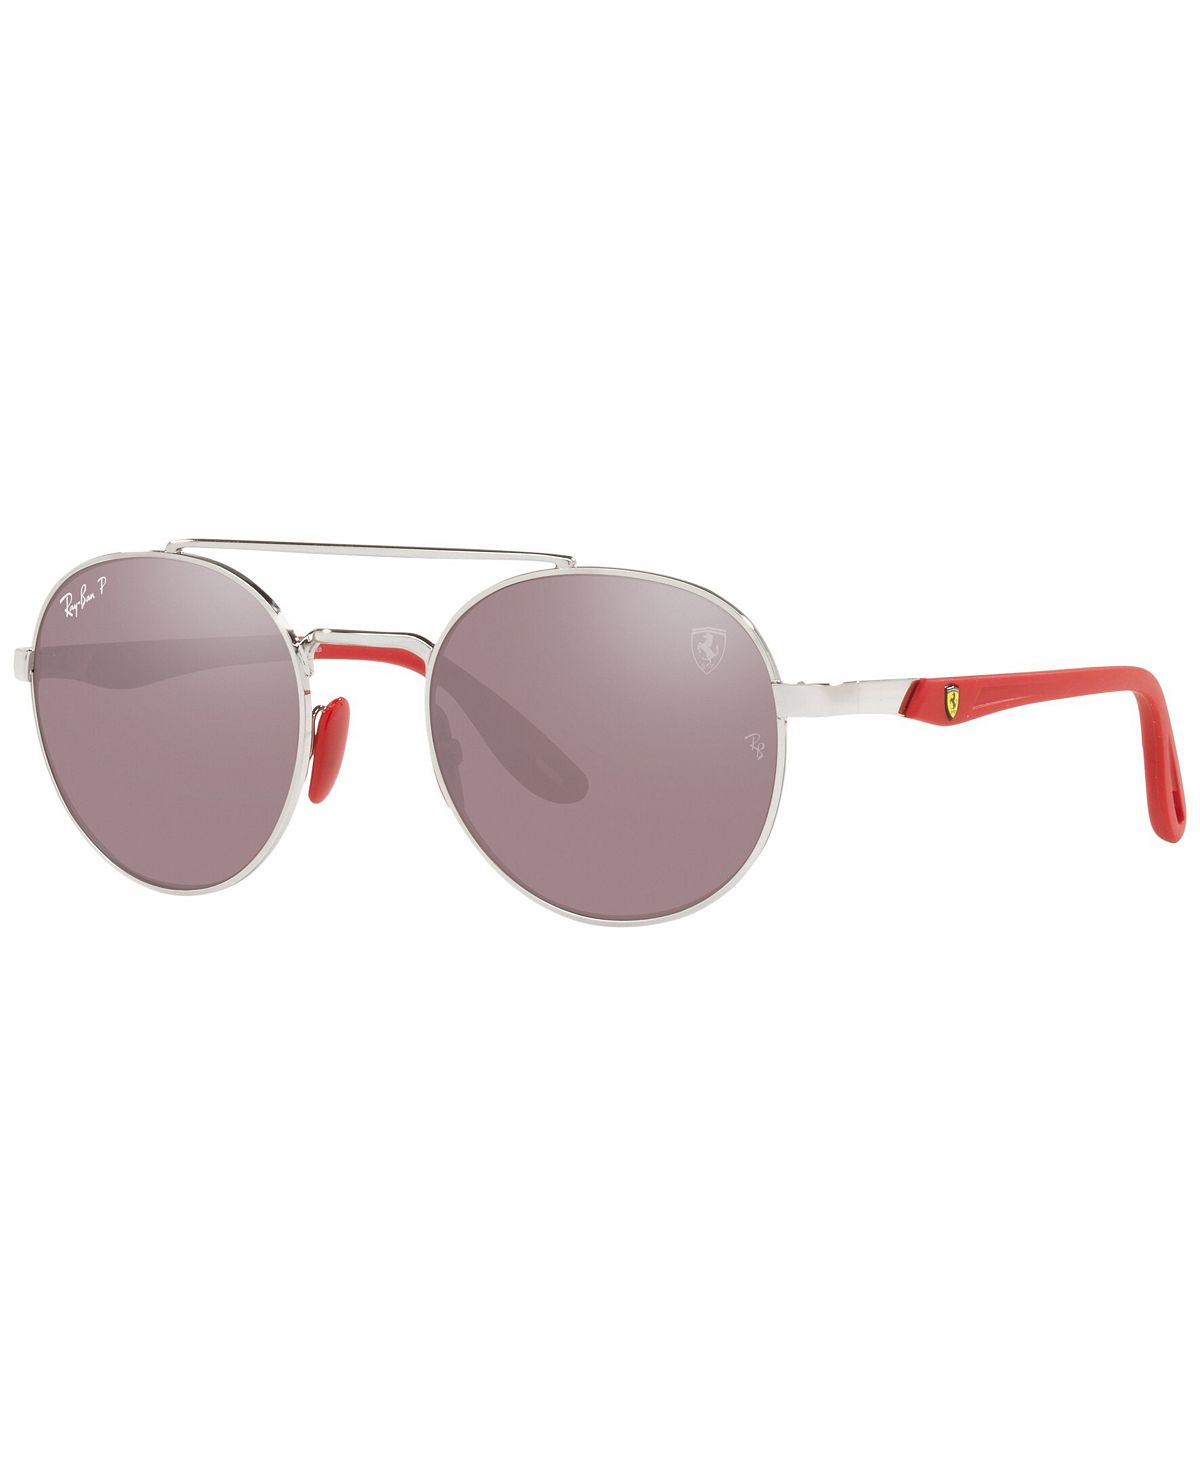 RB3696M Поляризованные солнцезащитные очки унисекс Scuderia Ferrari Collection 51 Ray-Ban